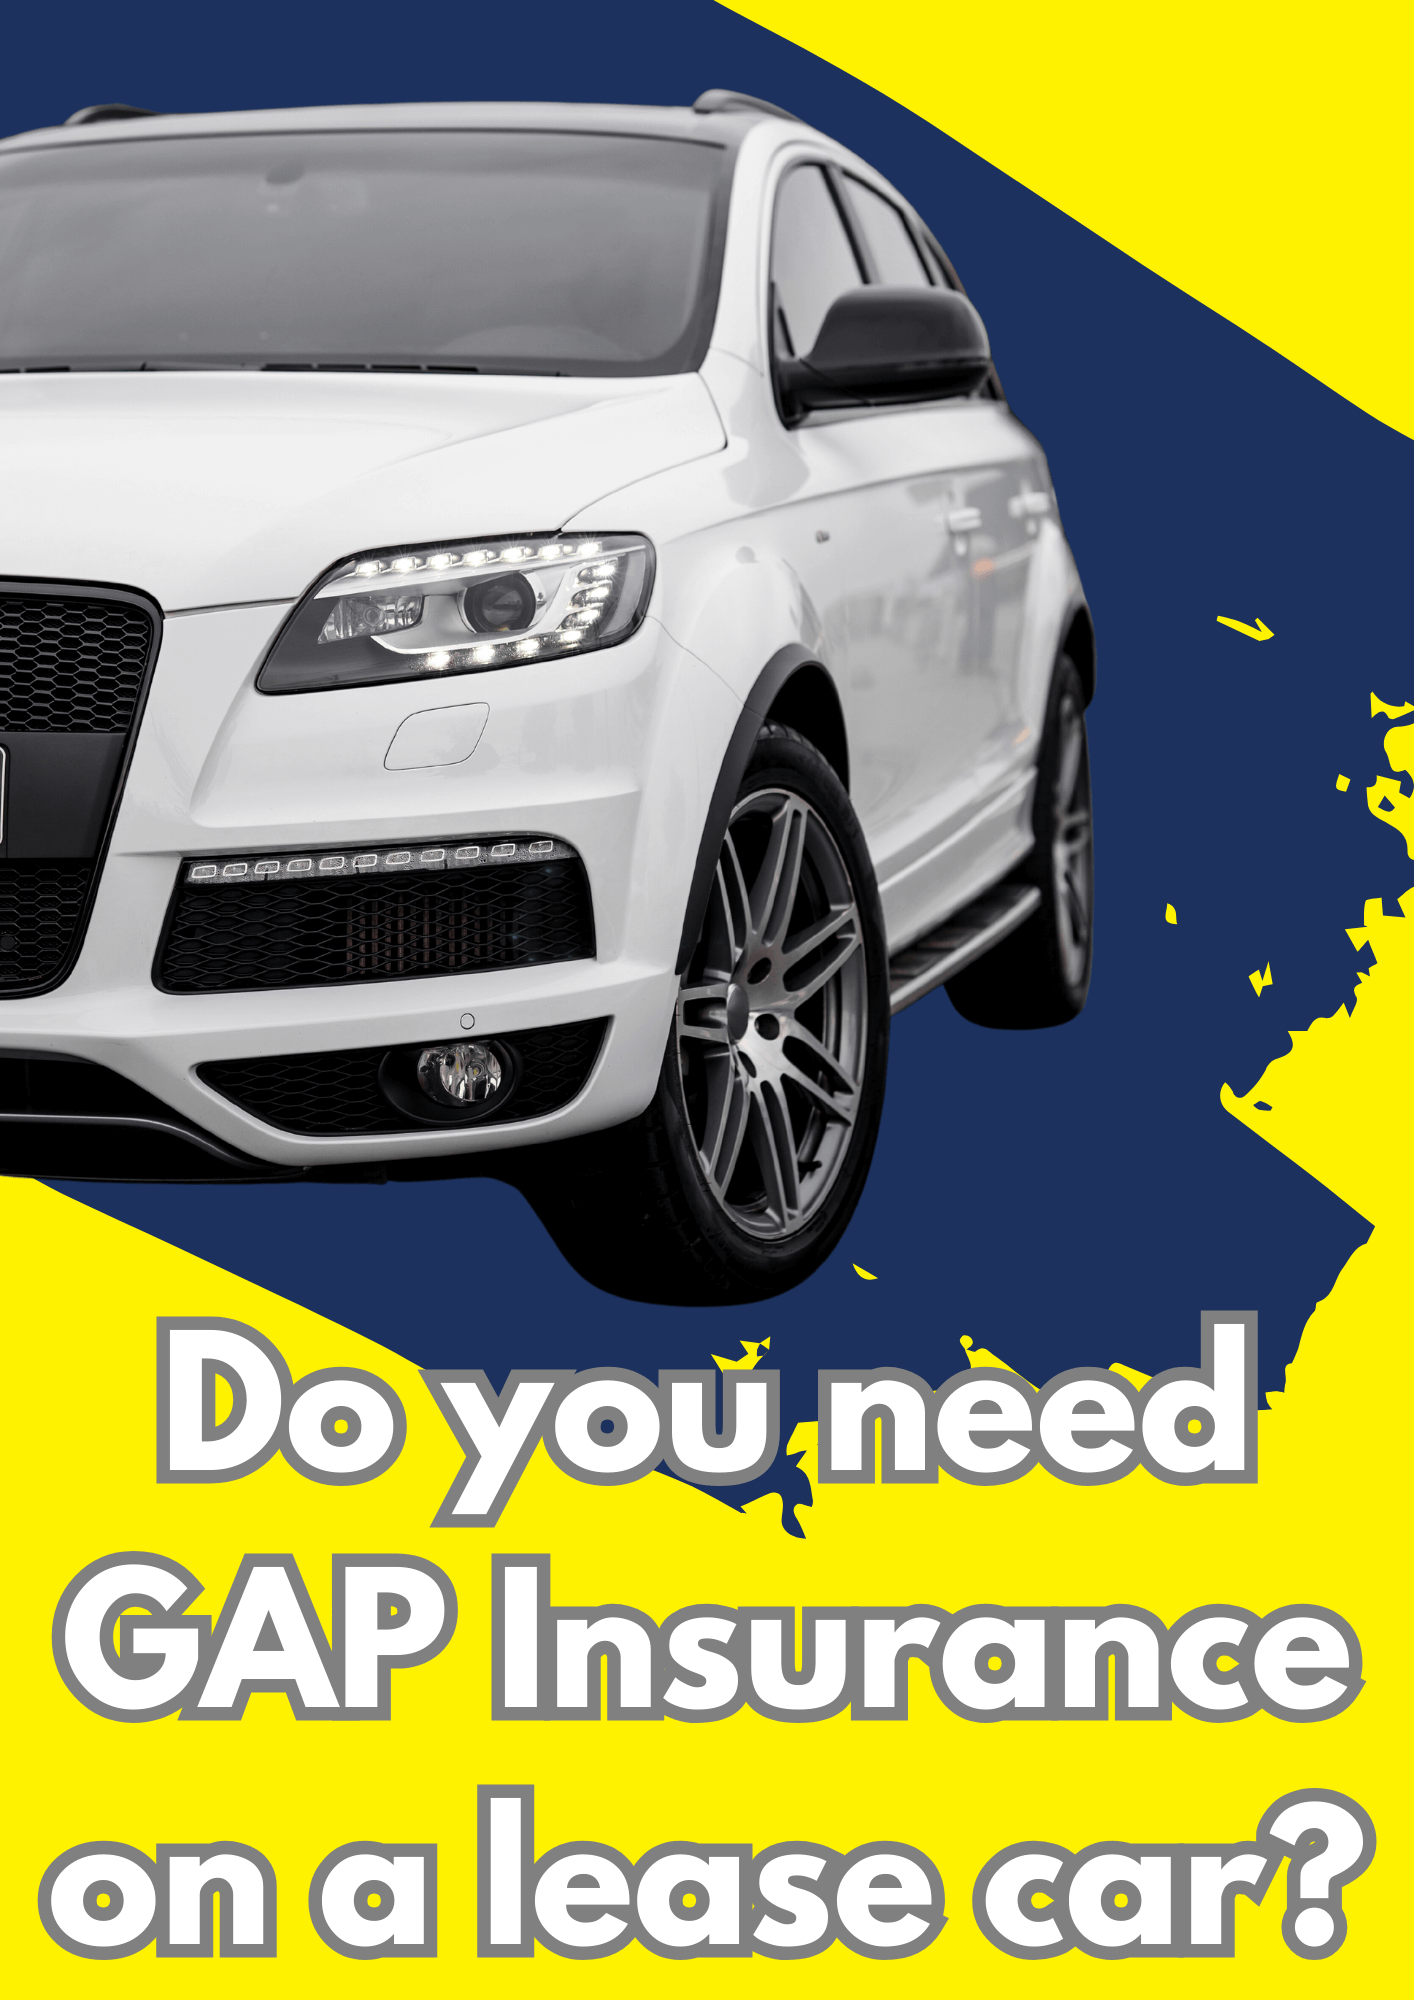 GAP Insurance for lease cars